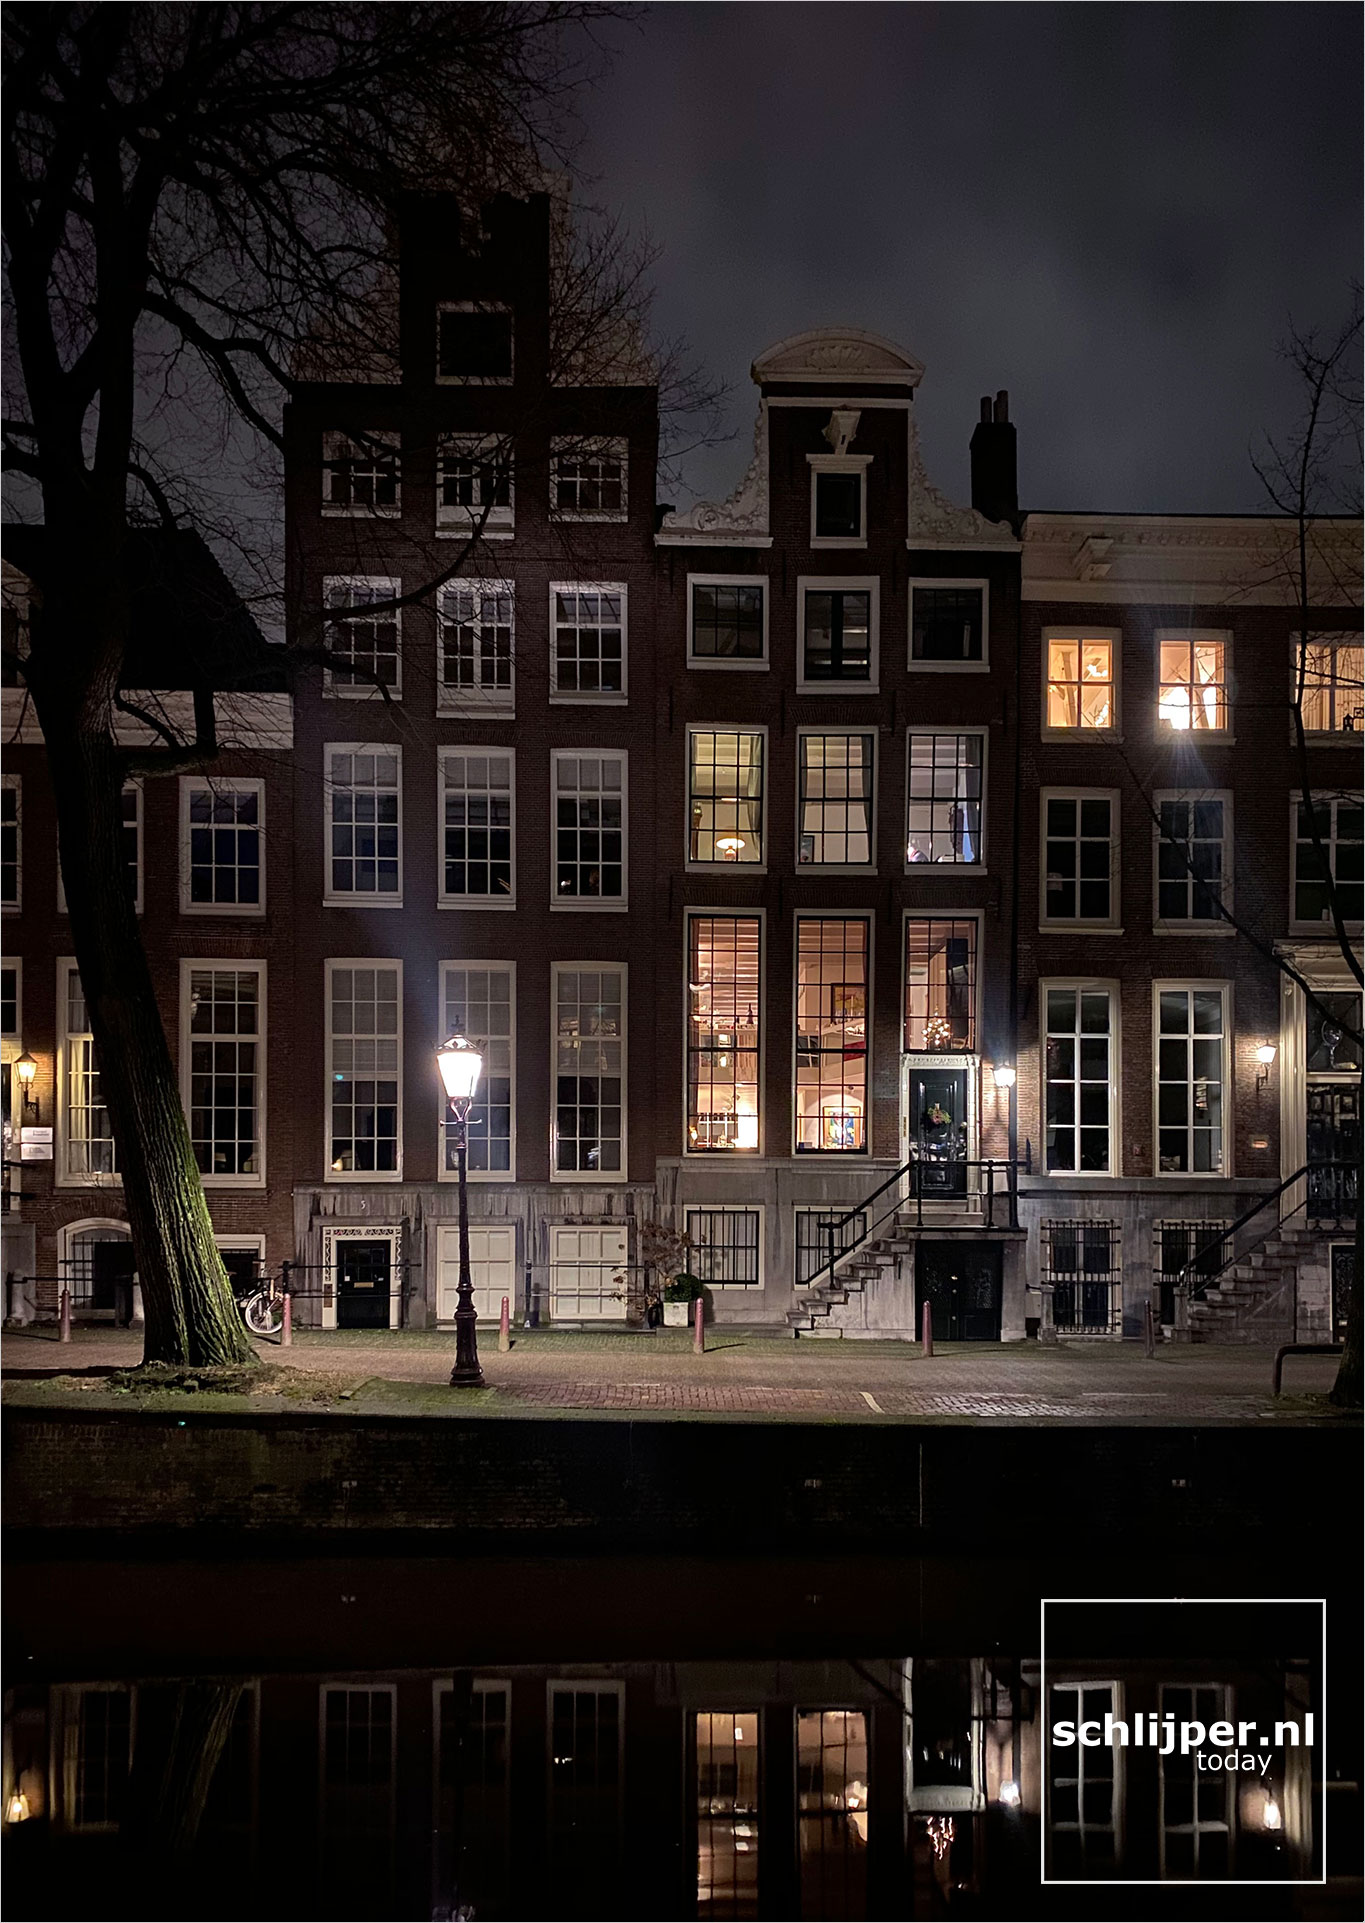 The Netherlands, Amsterdam, 1 januari 2021